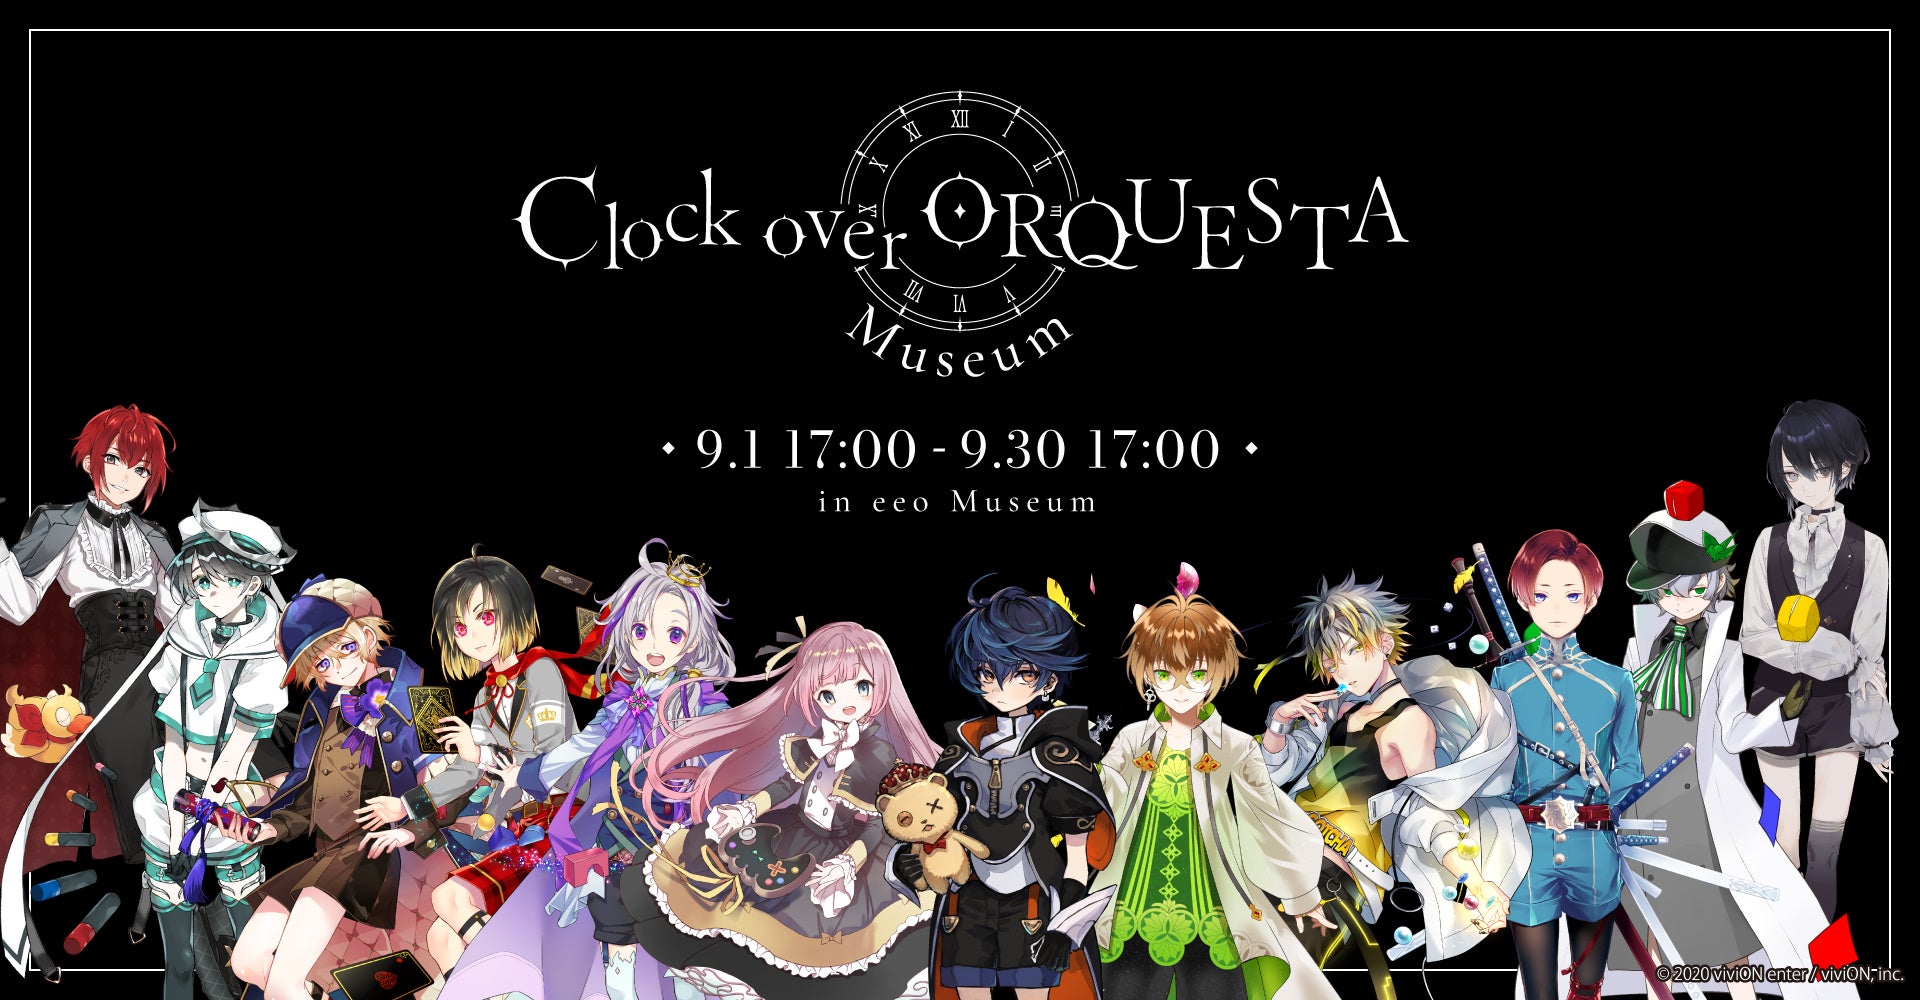 SNS連動型キャラクターソングプロジェクト『Clock over ORQUESTA』のオンラインミュージアムが開催！新作グッズがそろったオンラインくじ『eeoくじ』も同時スタート